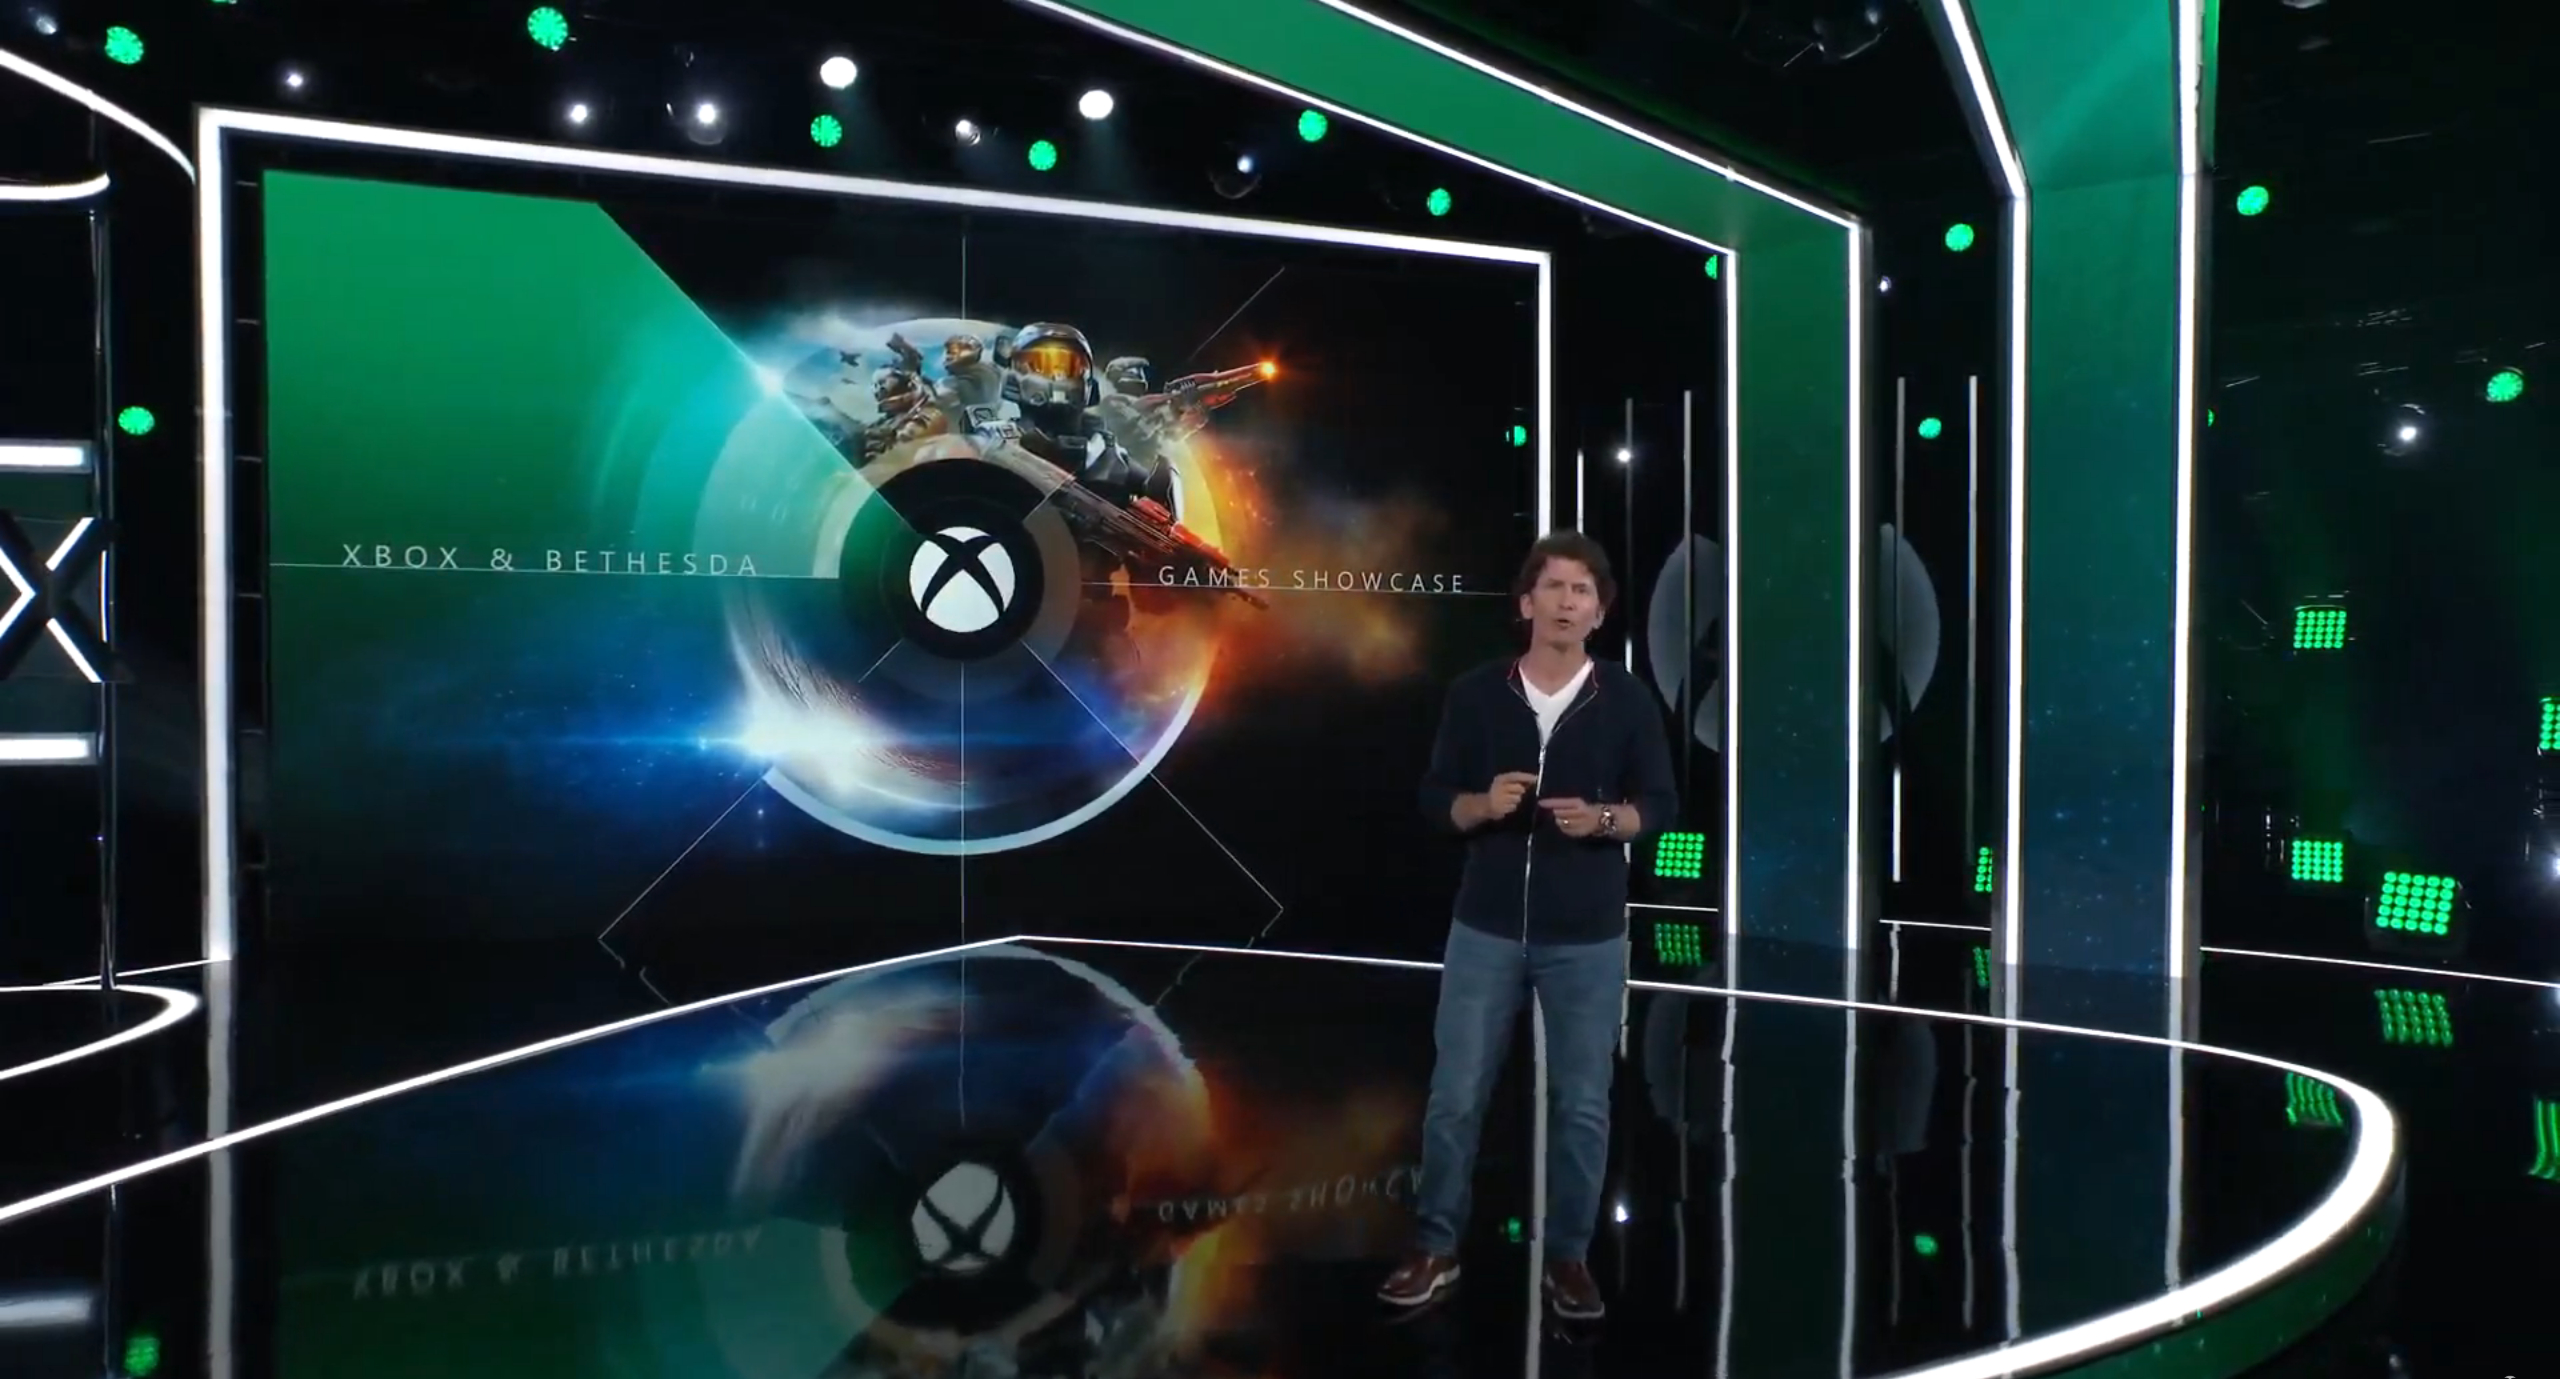 Slime Rancher 2' announced during E3 Bethesda and Xbox Showcase